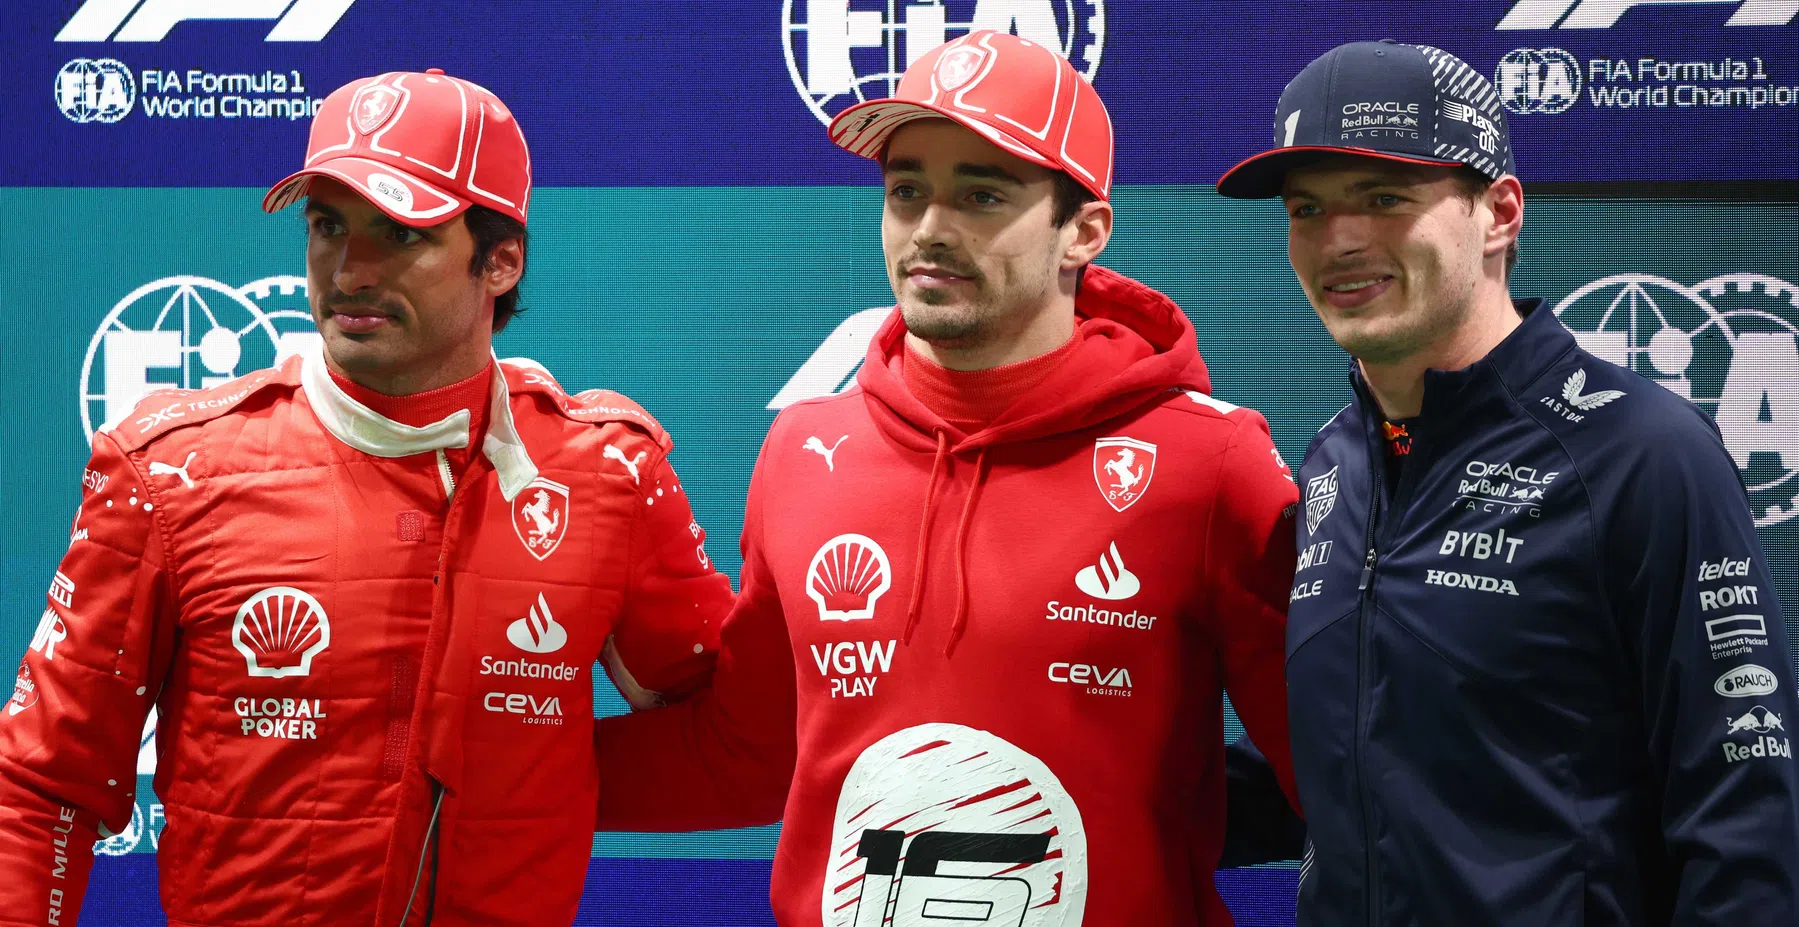 Grid de largada: Leclerc e Verstappen na primeira fila, Sainz penalizado